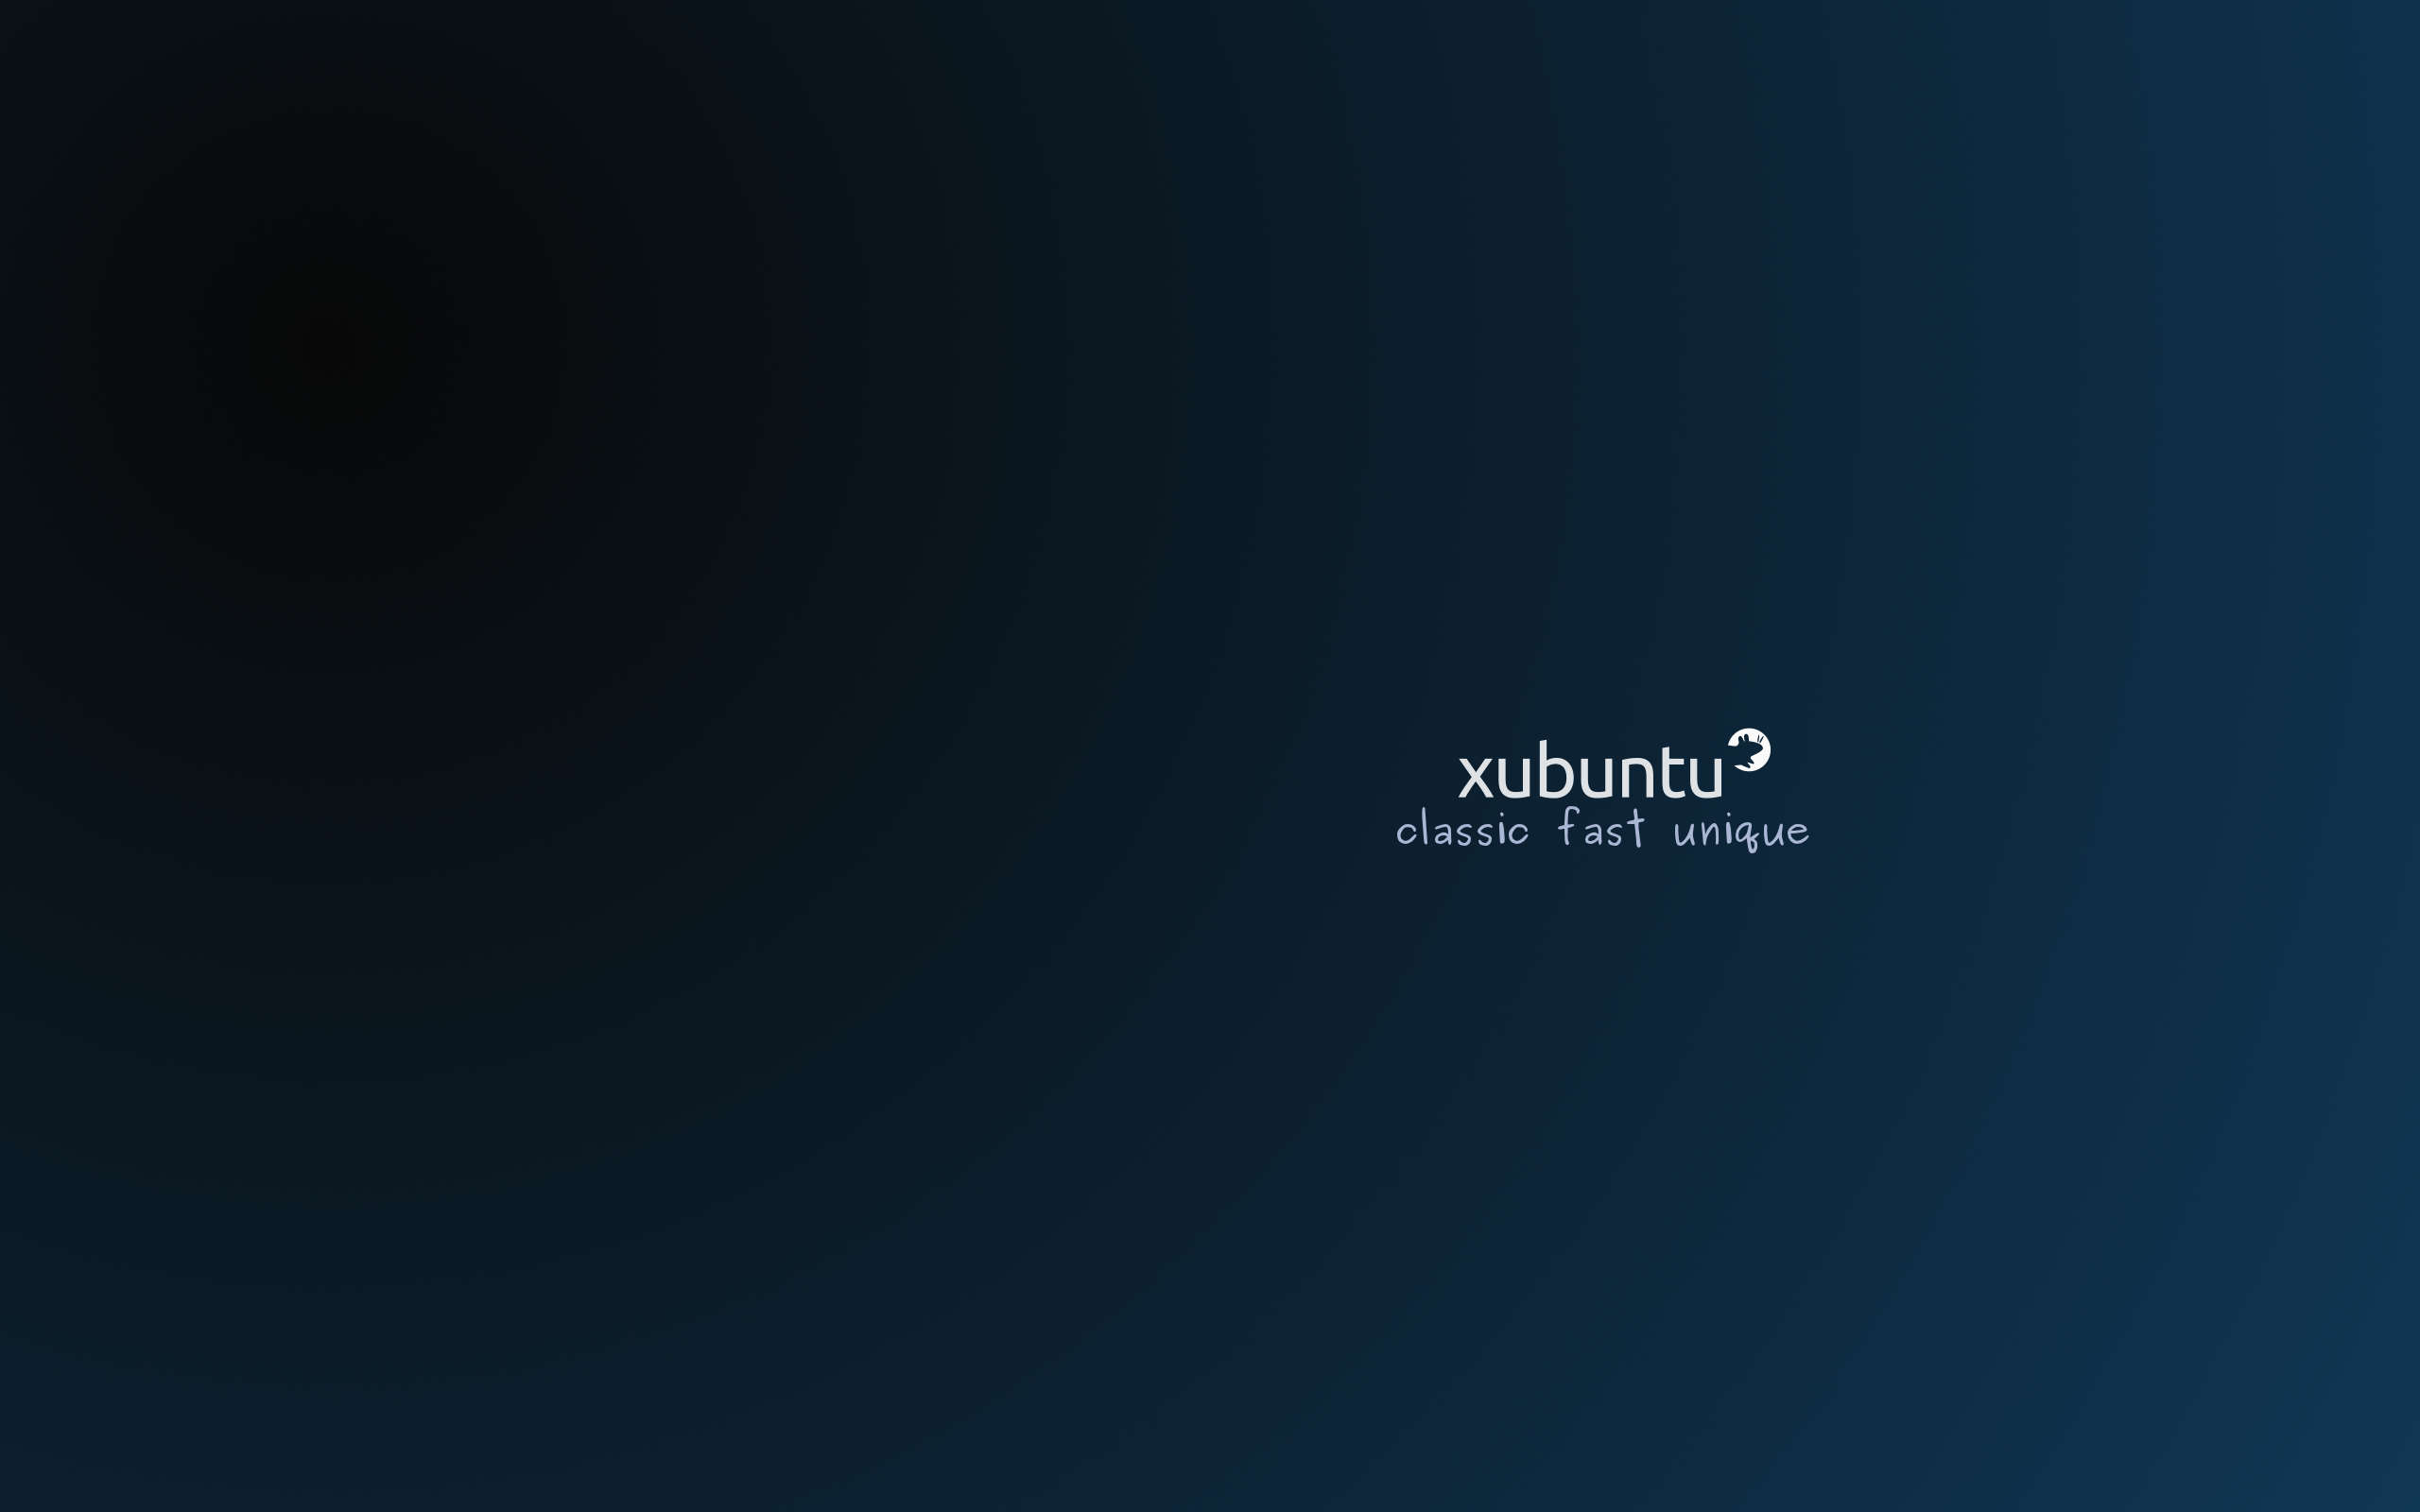 Xubuntu elegance waves, experience, fresh experience, & classic